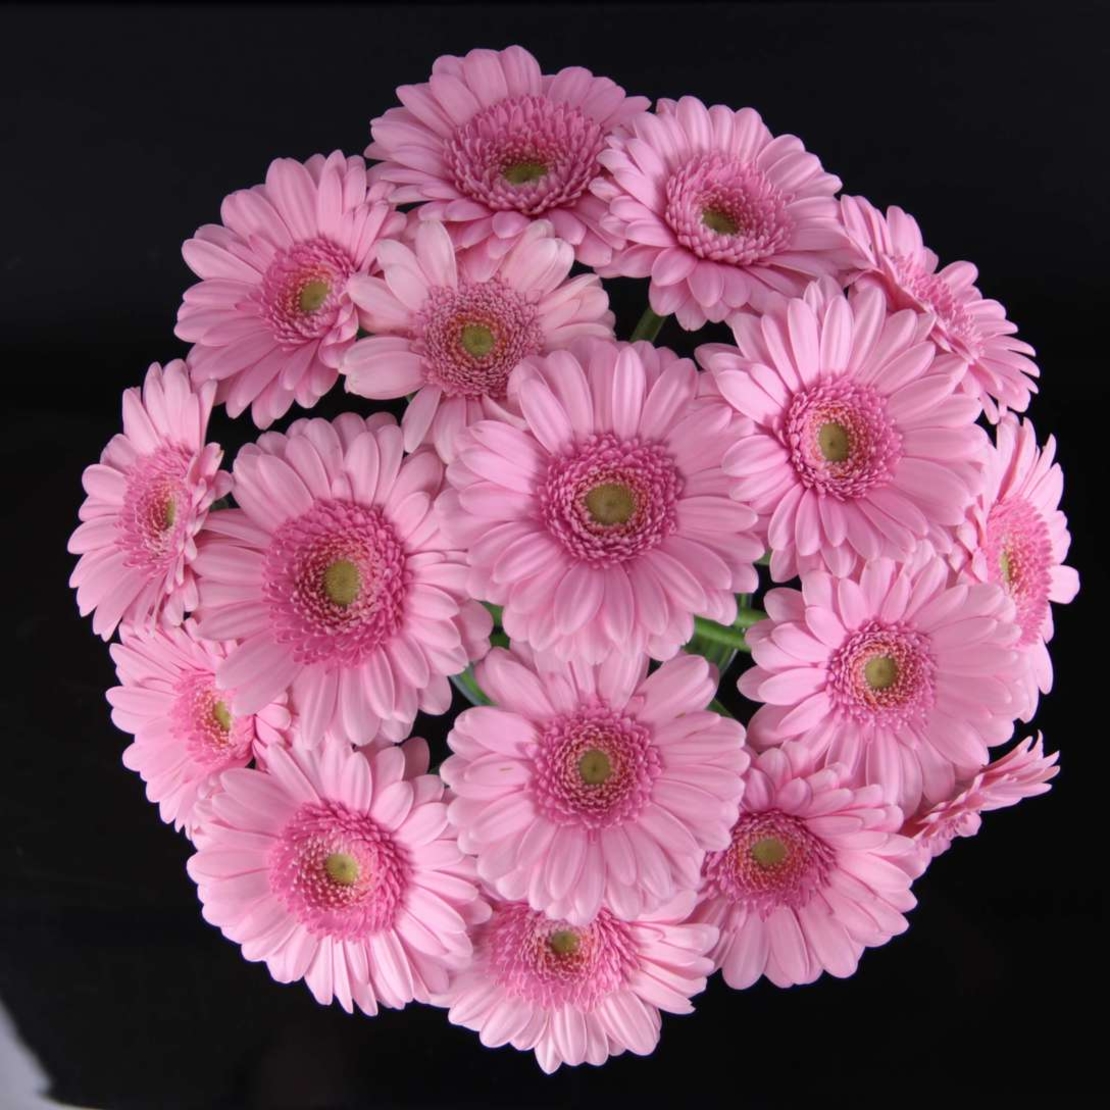 Pink gerberas in the vase